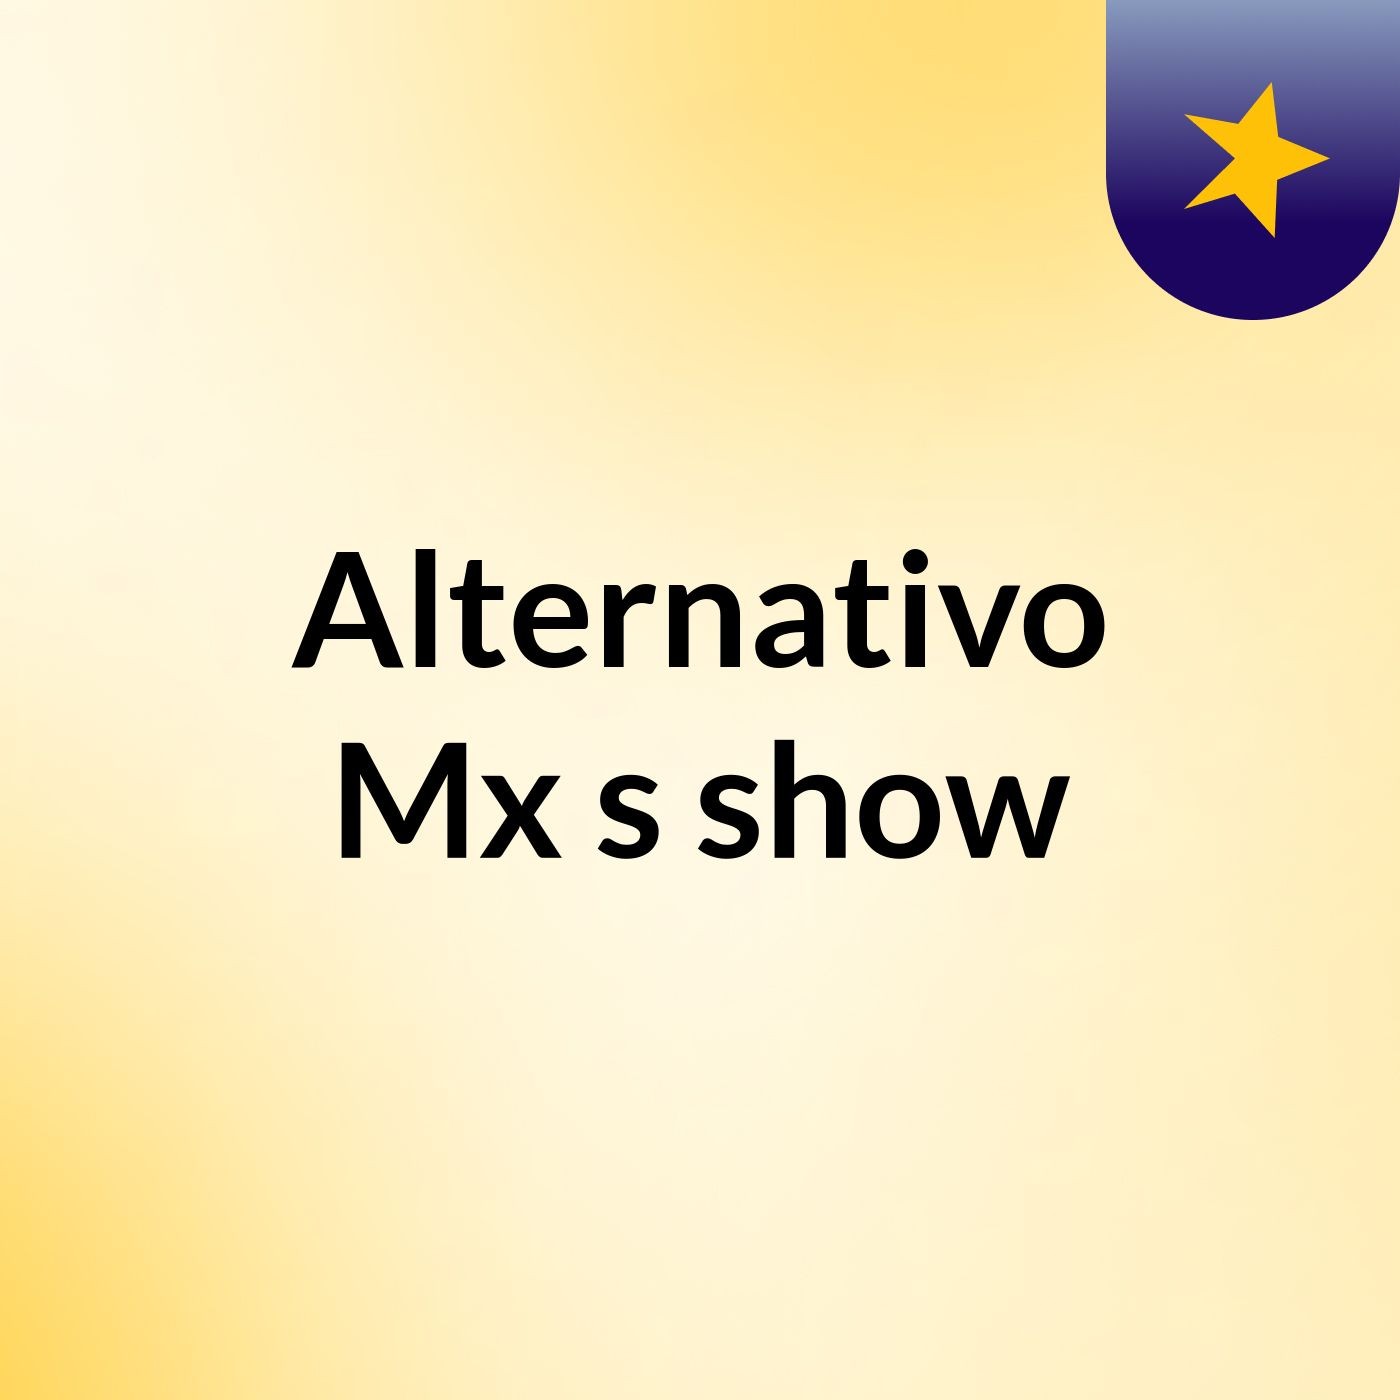 Alternativo Mx's show